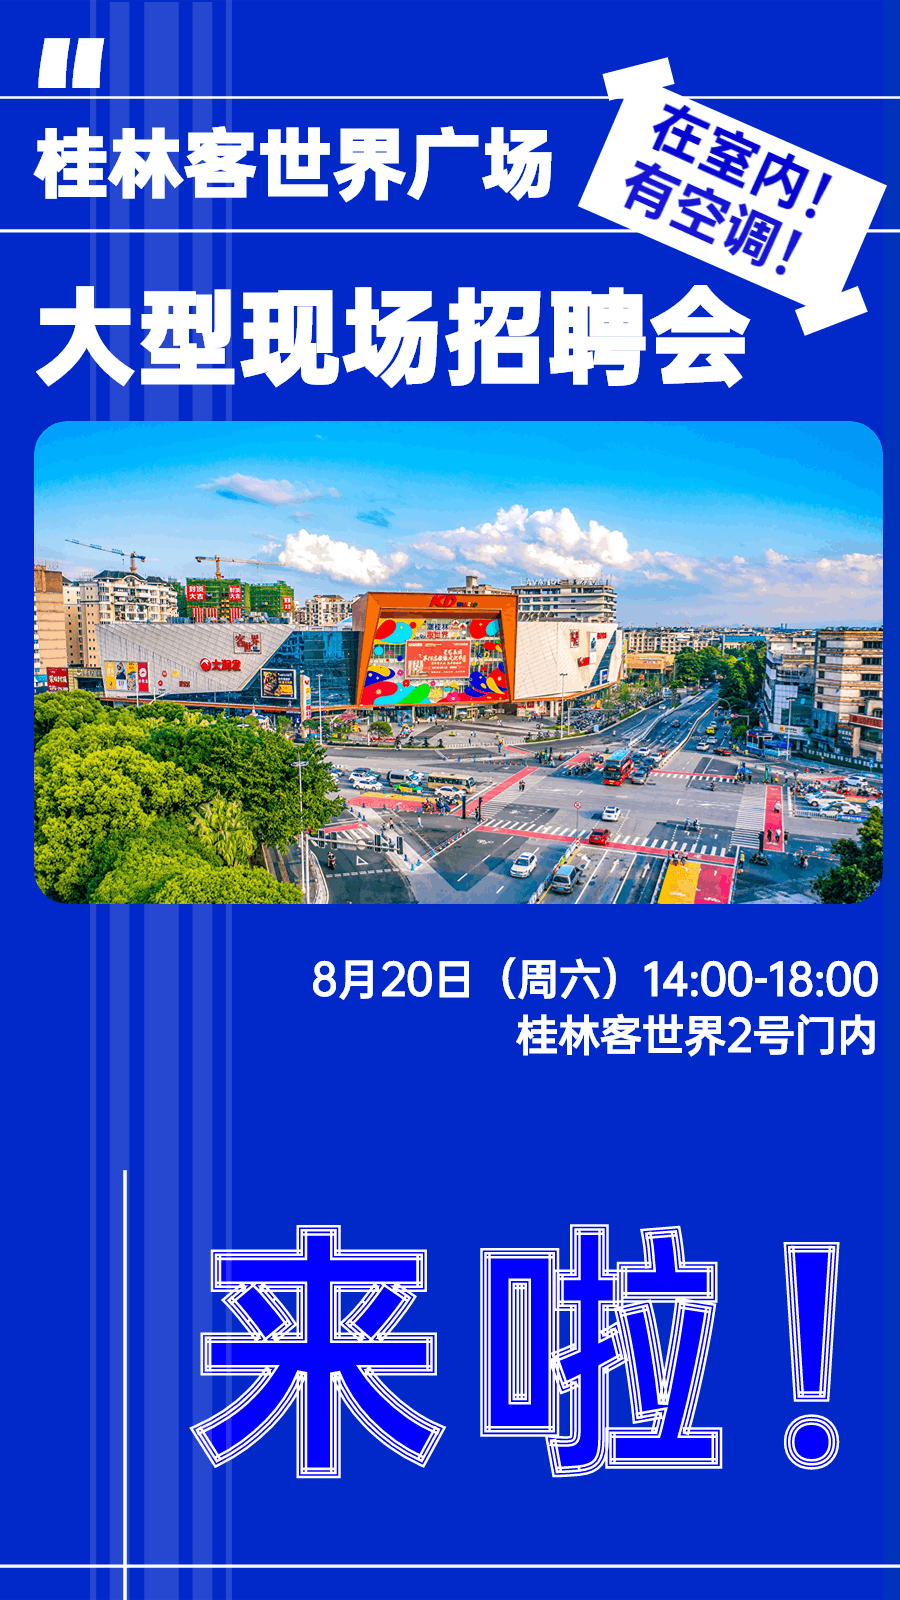 定了！就在8月20日，桂林客世界廣場！有空調的室內招聘會！這些桂林名企會參加！點我看劇透……